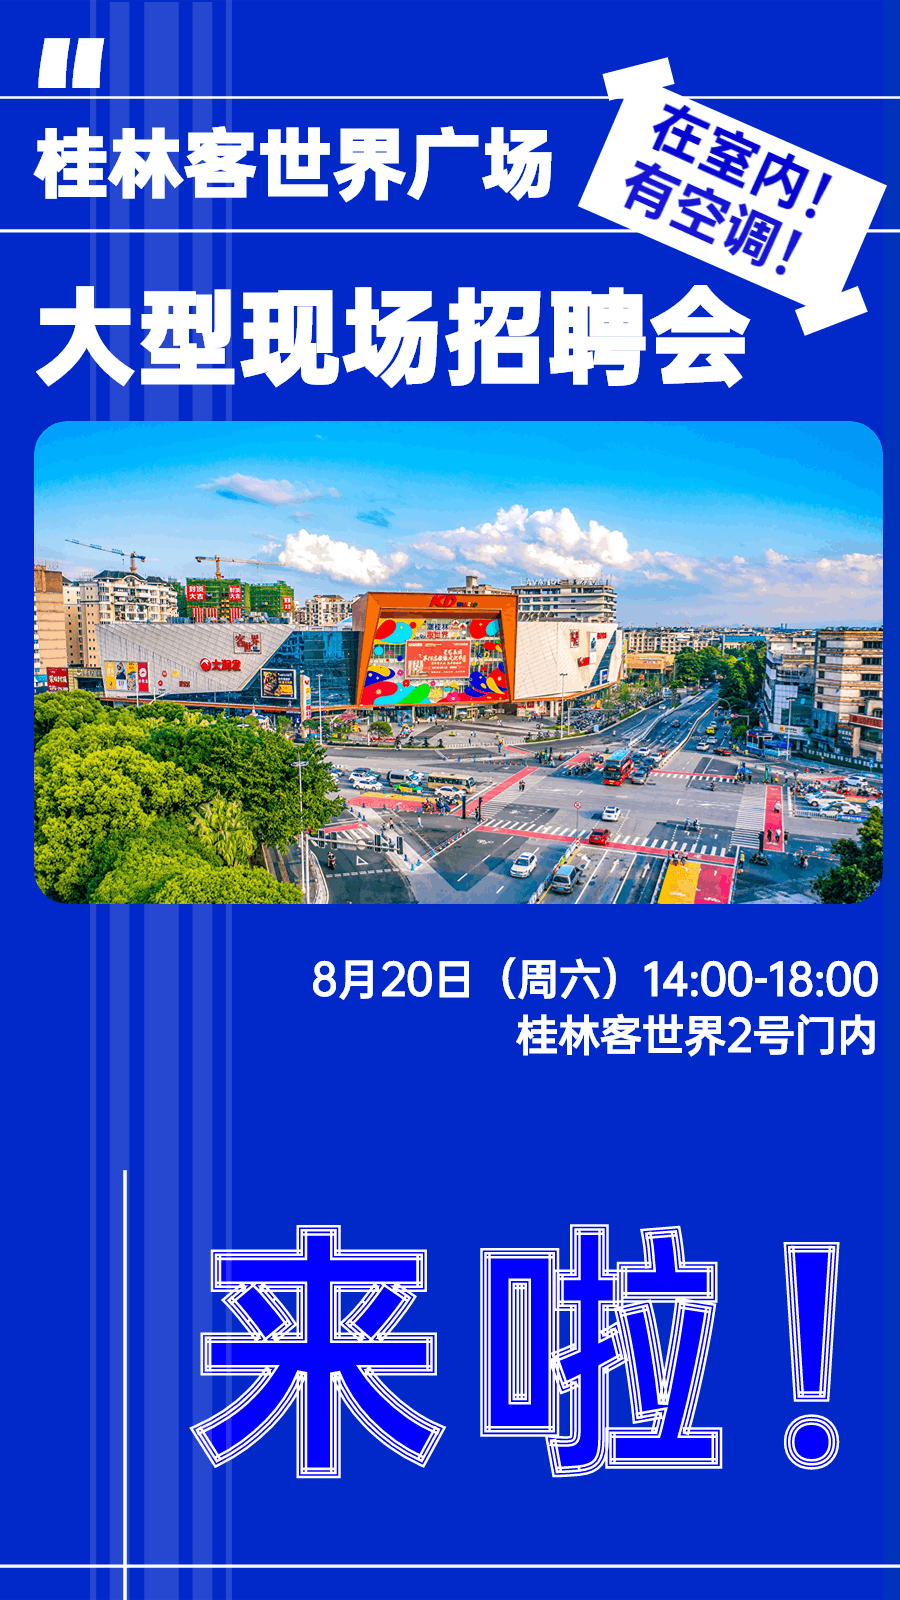 定了！就在8月20日，桂林客世界廣場！有空調的室內招聘會！這些桂林名企會參加！點我看劇透……